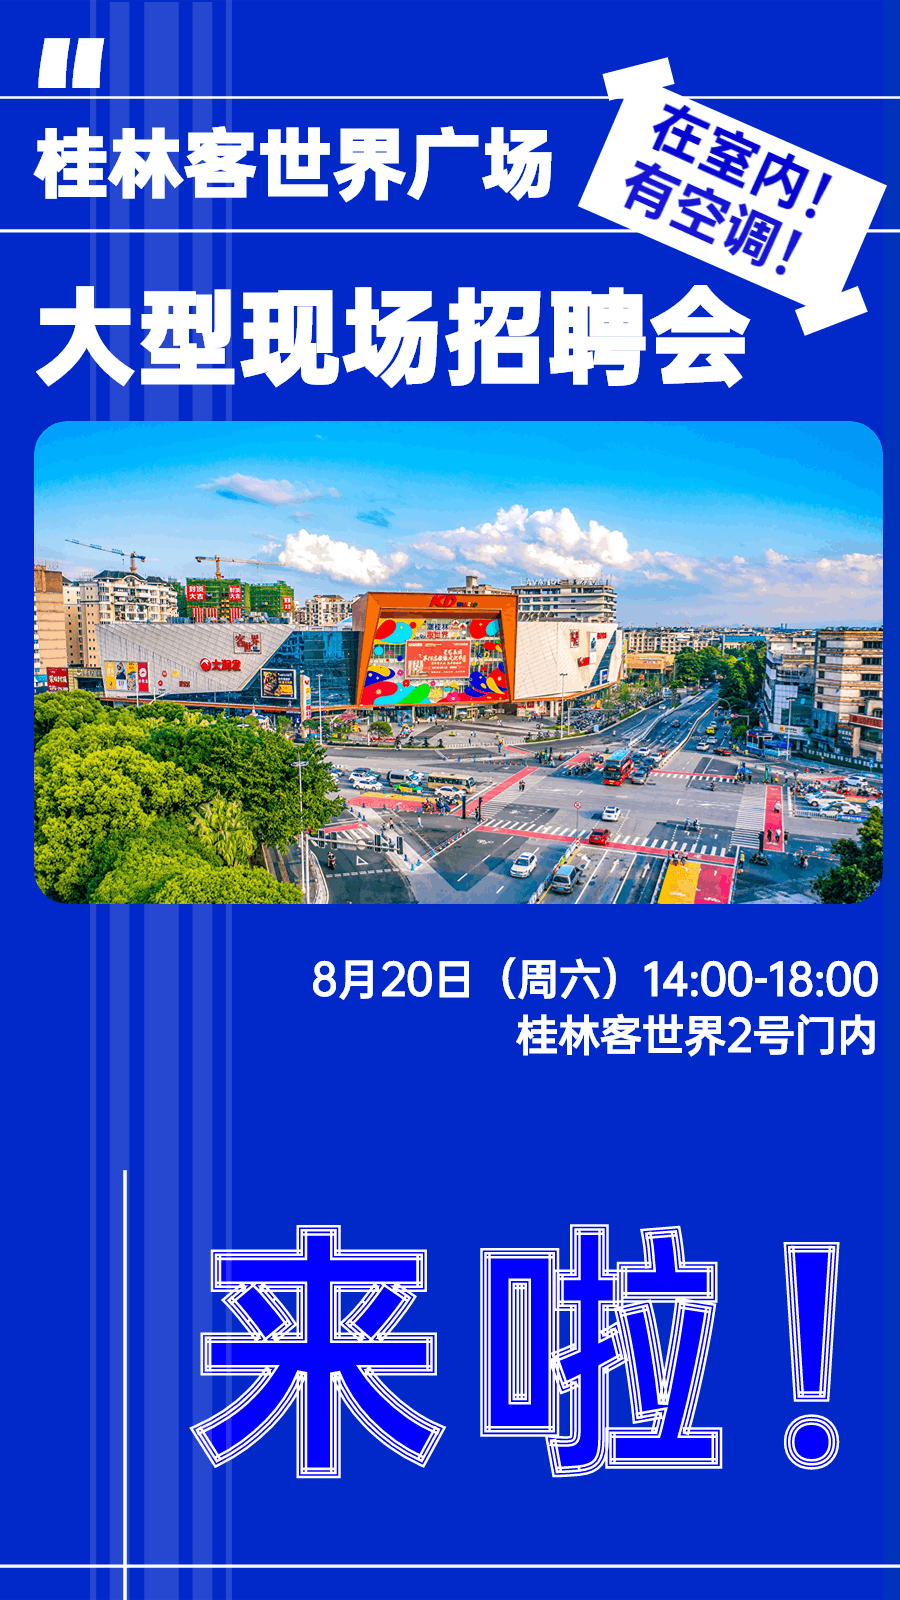 定了！就在8月20日，桂林客世界廣場！有空調的室內招聘會！這些桂林名企會參加！點我看劇透……